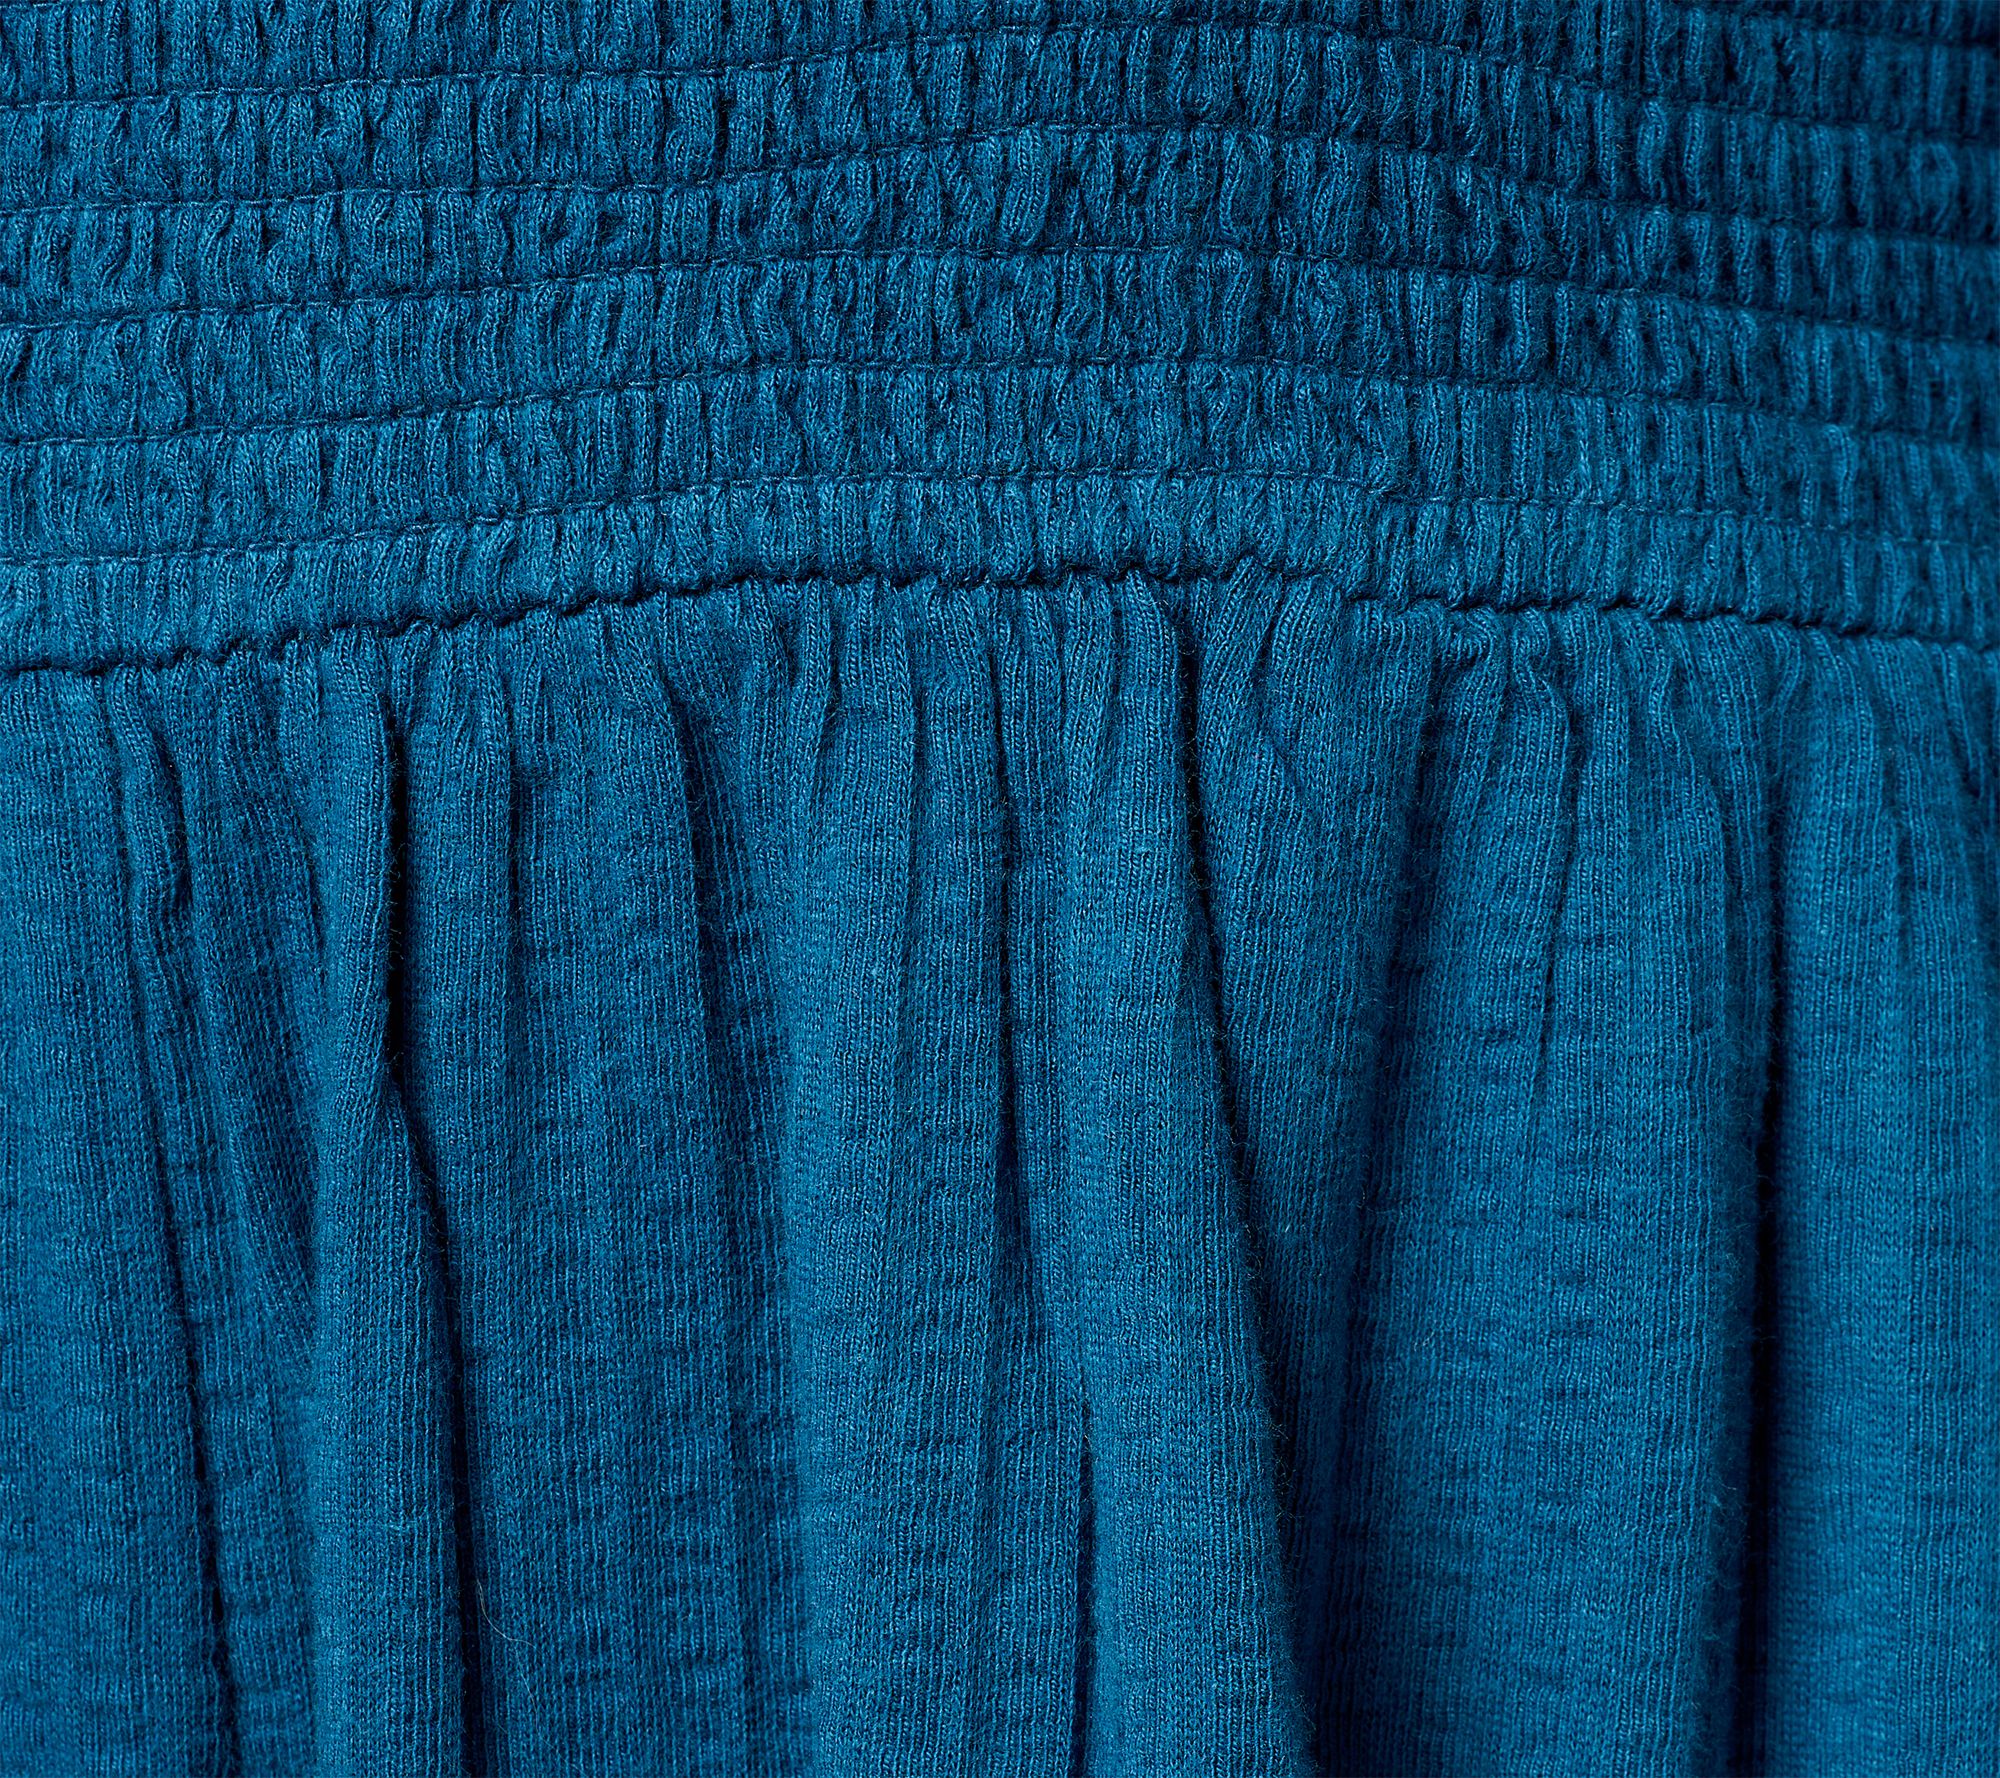 Thecookie Rib Knit Fabric Thick 100% Cotton Neckline Cuffs Cuff Lower Hem  Clothing Rib Knit Fabric ForGarment Accessories